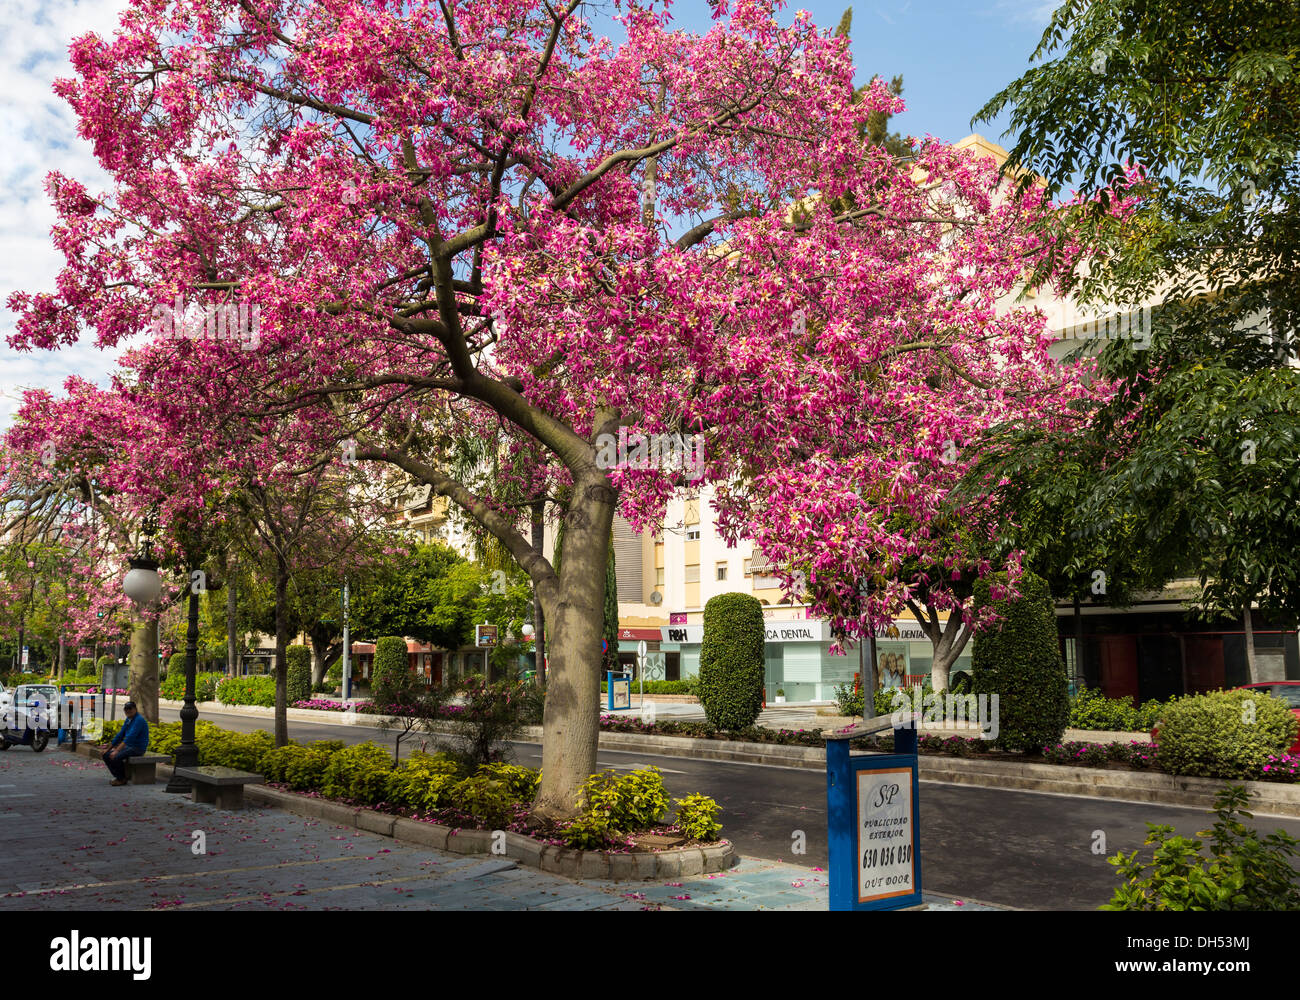 SILK FLOSS [CEIBA SPECIOSA ] FLOWERING TREE WITH SPECTACULAR PINK ...